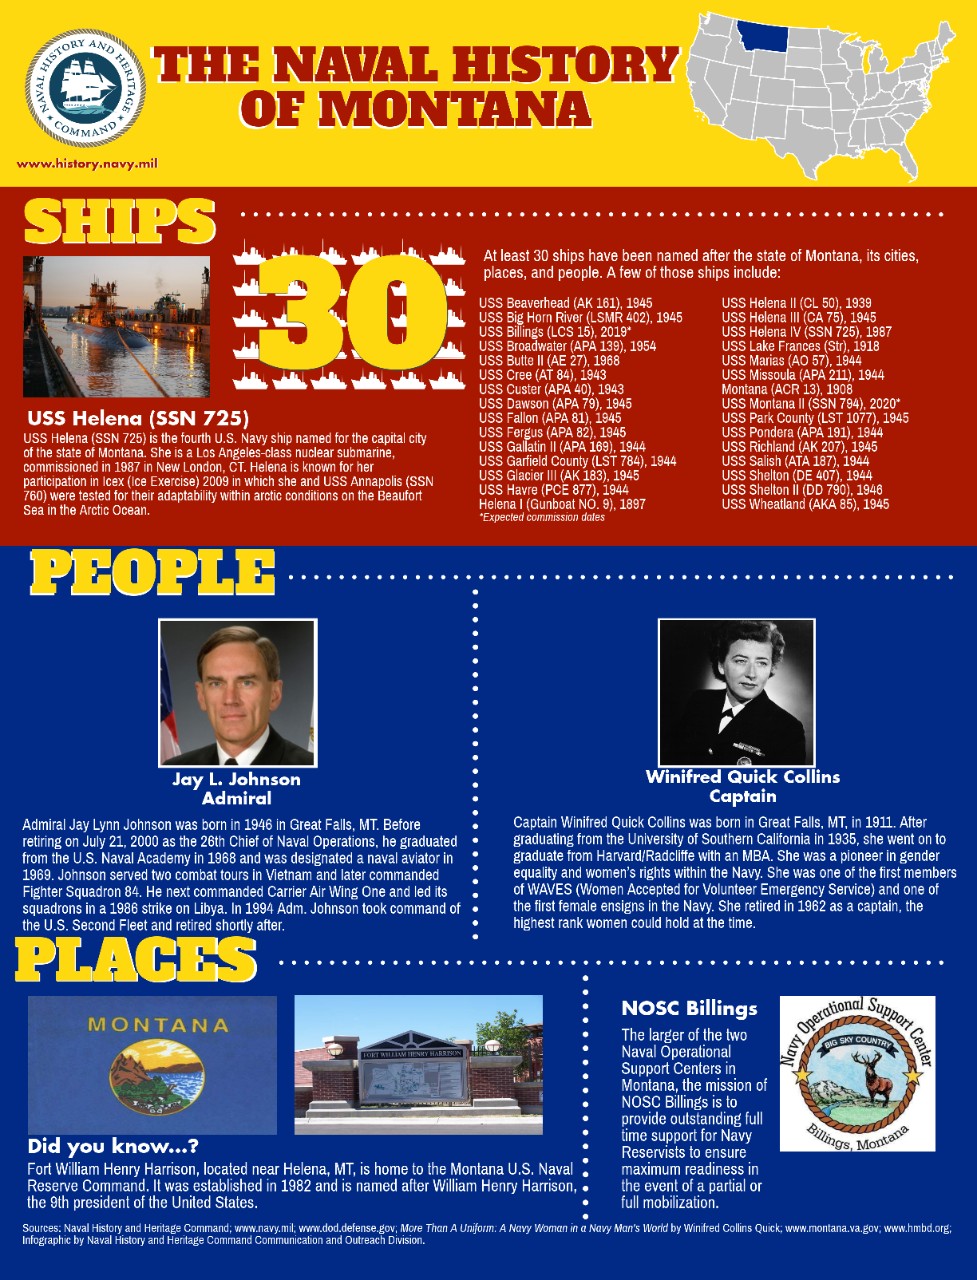 Montana's Naval History